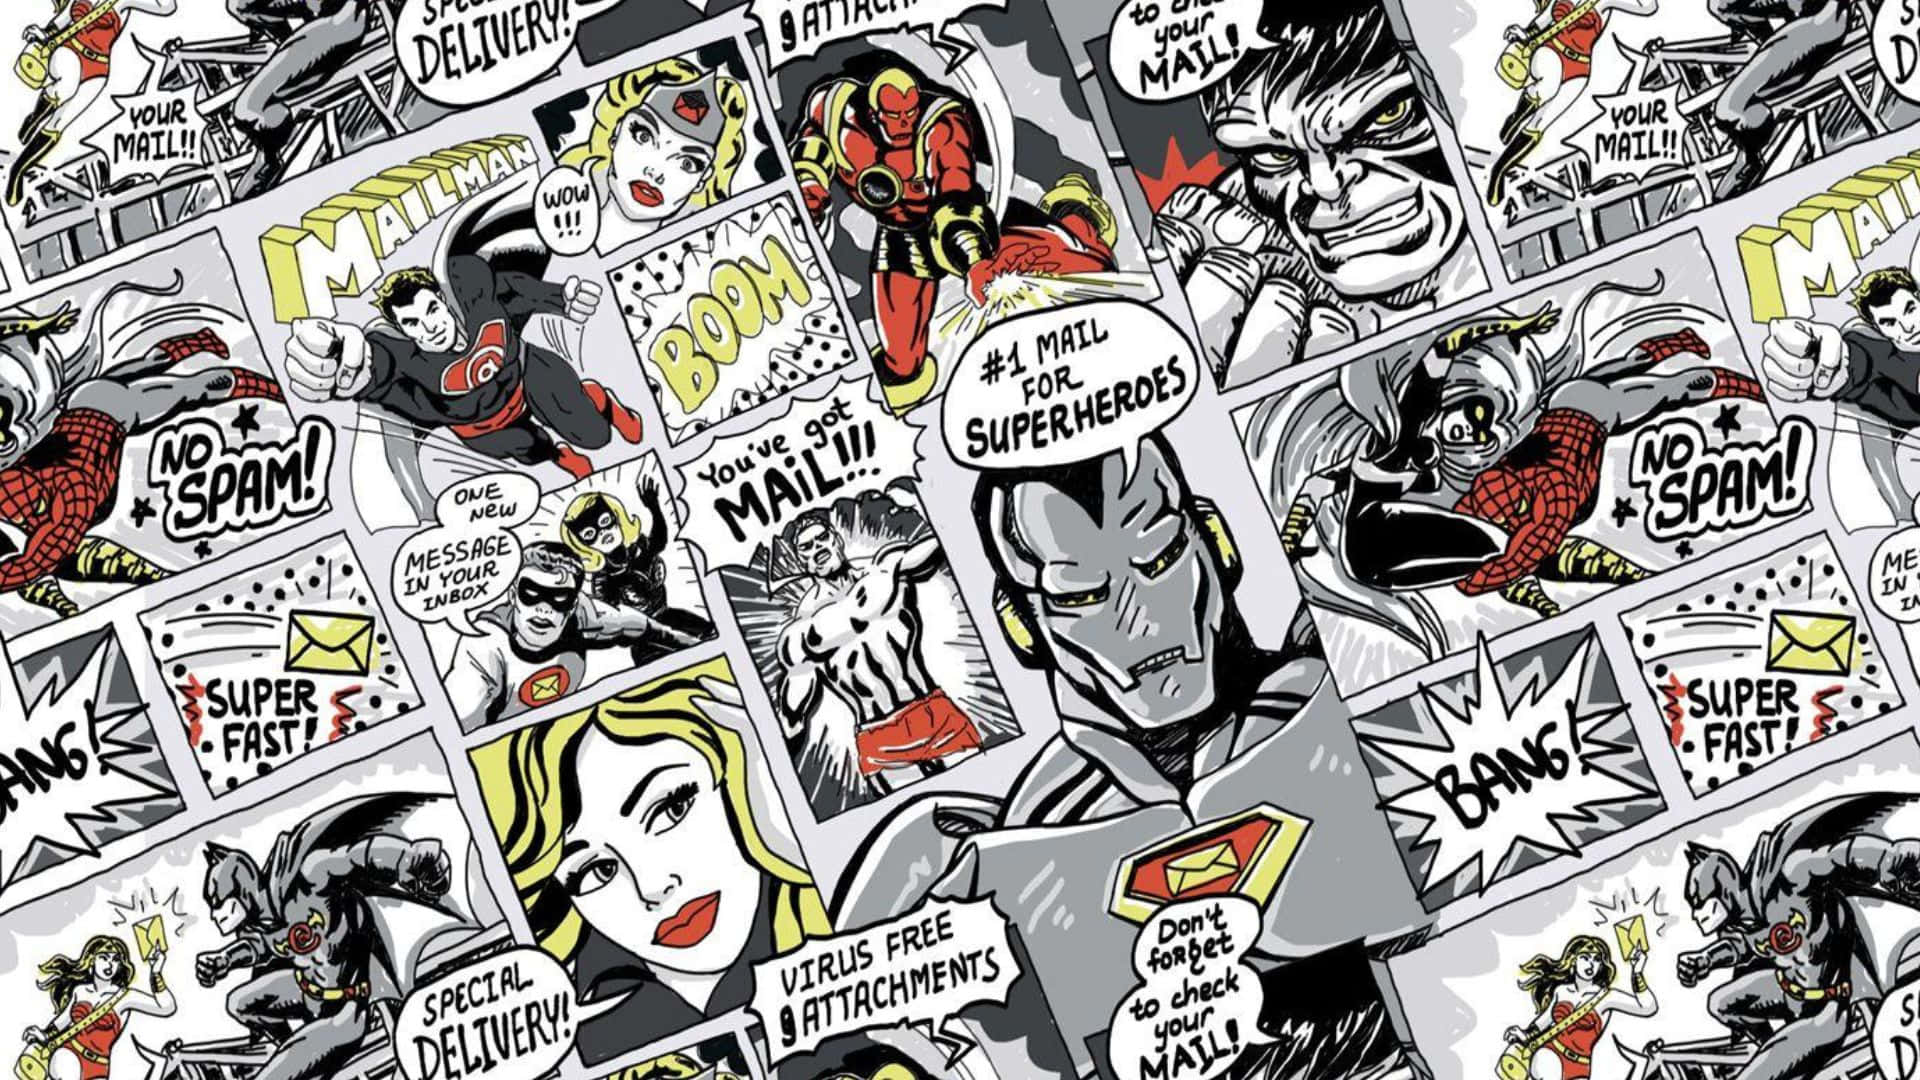 Classic Retro Superhero Action Comic Cover Wallpaper